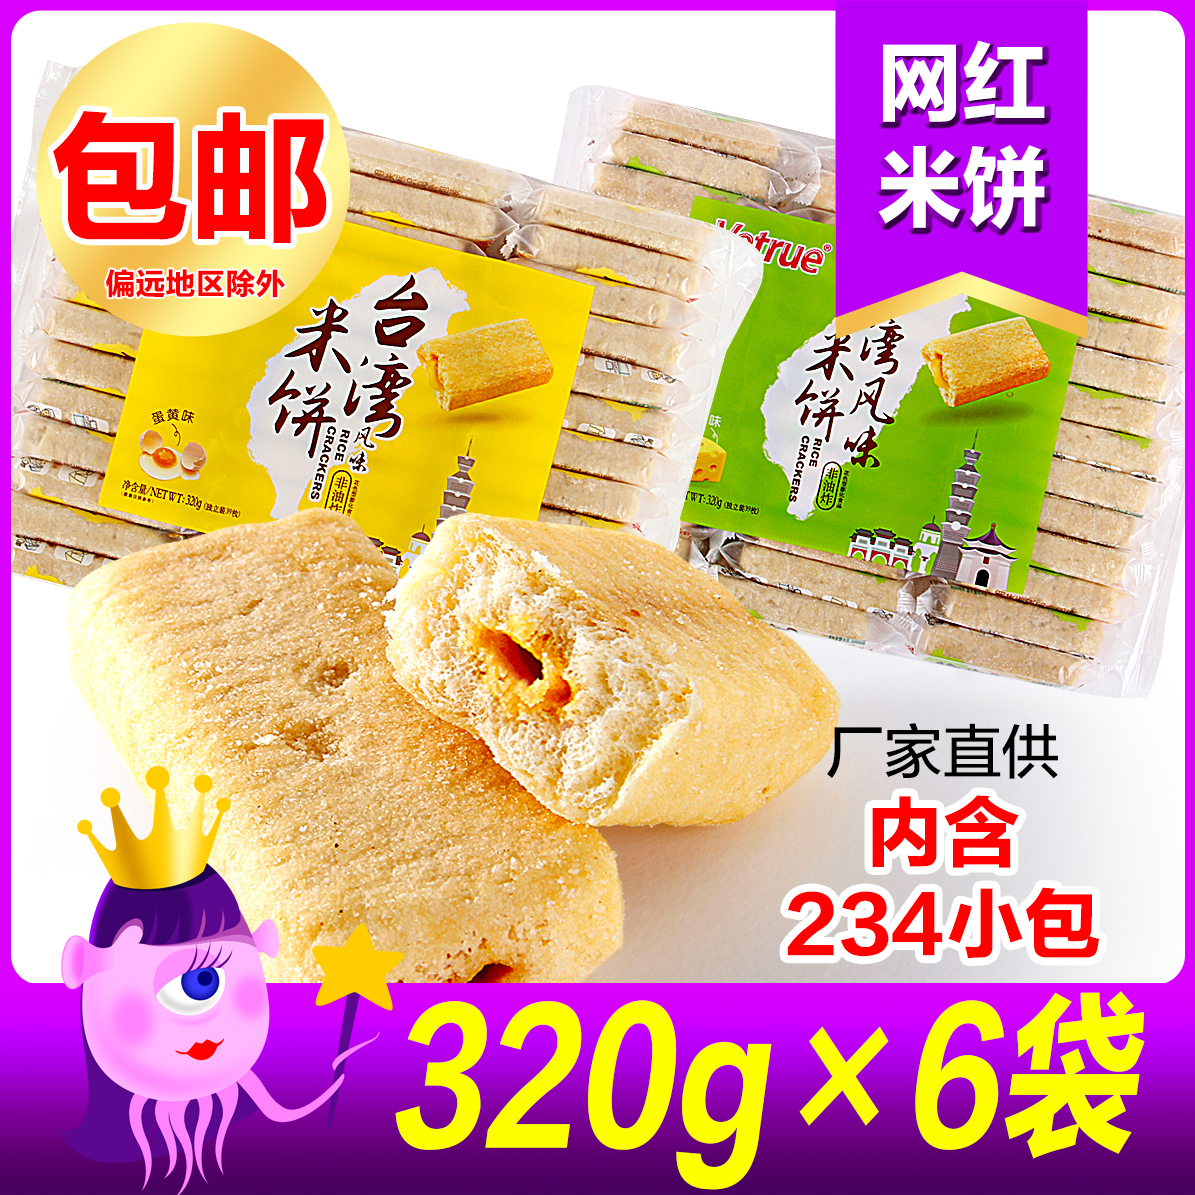 Vetrue台湾风味惟度米饼 320克*6袋 非油炸办公室健康零食 零食/坚果/特产 膨化食品 原图主图